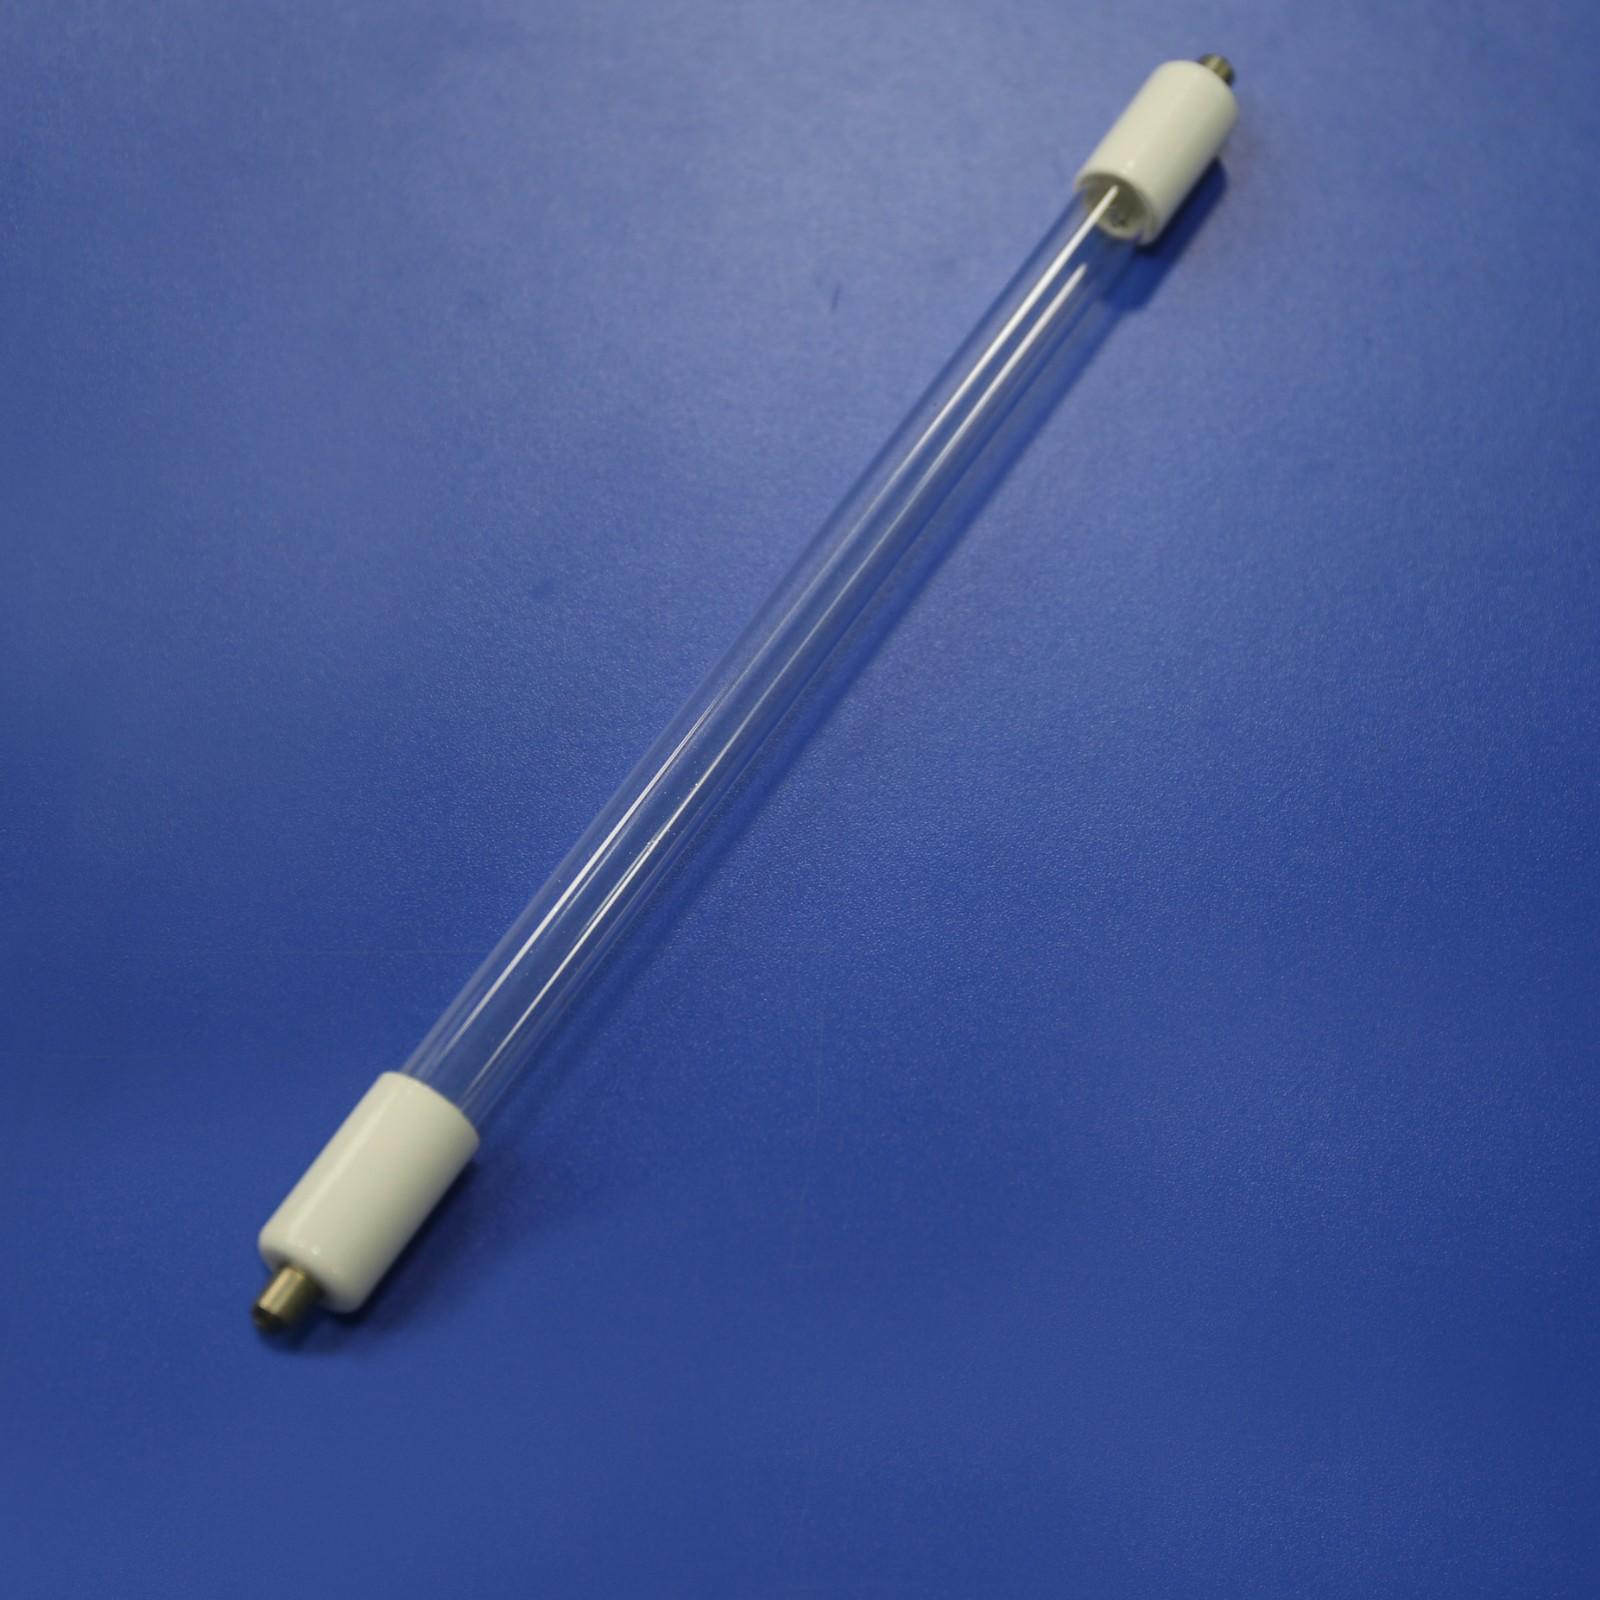 ultraviolet uvc germicidal lamp start chinese manufacturer for air sterilization-1